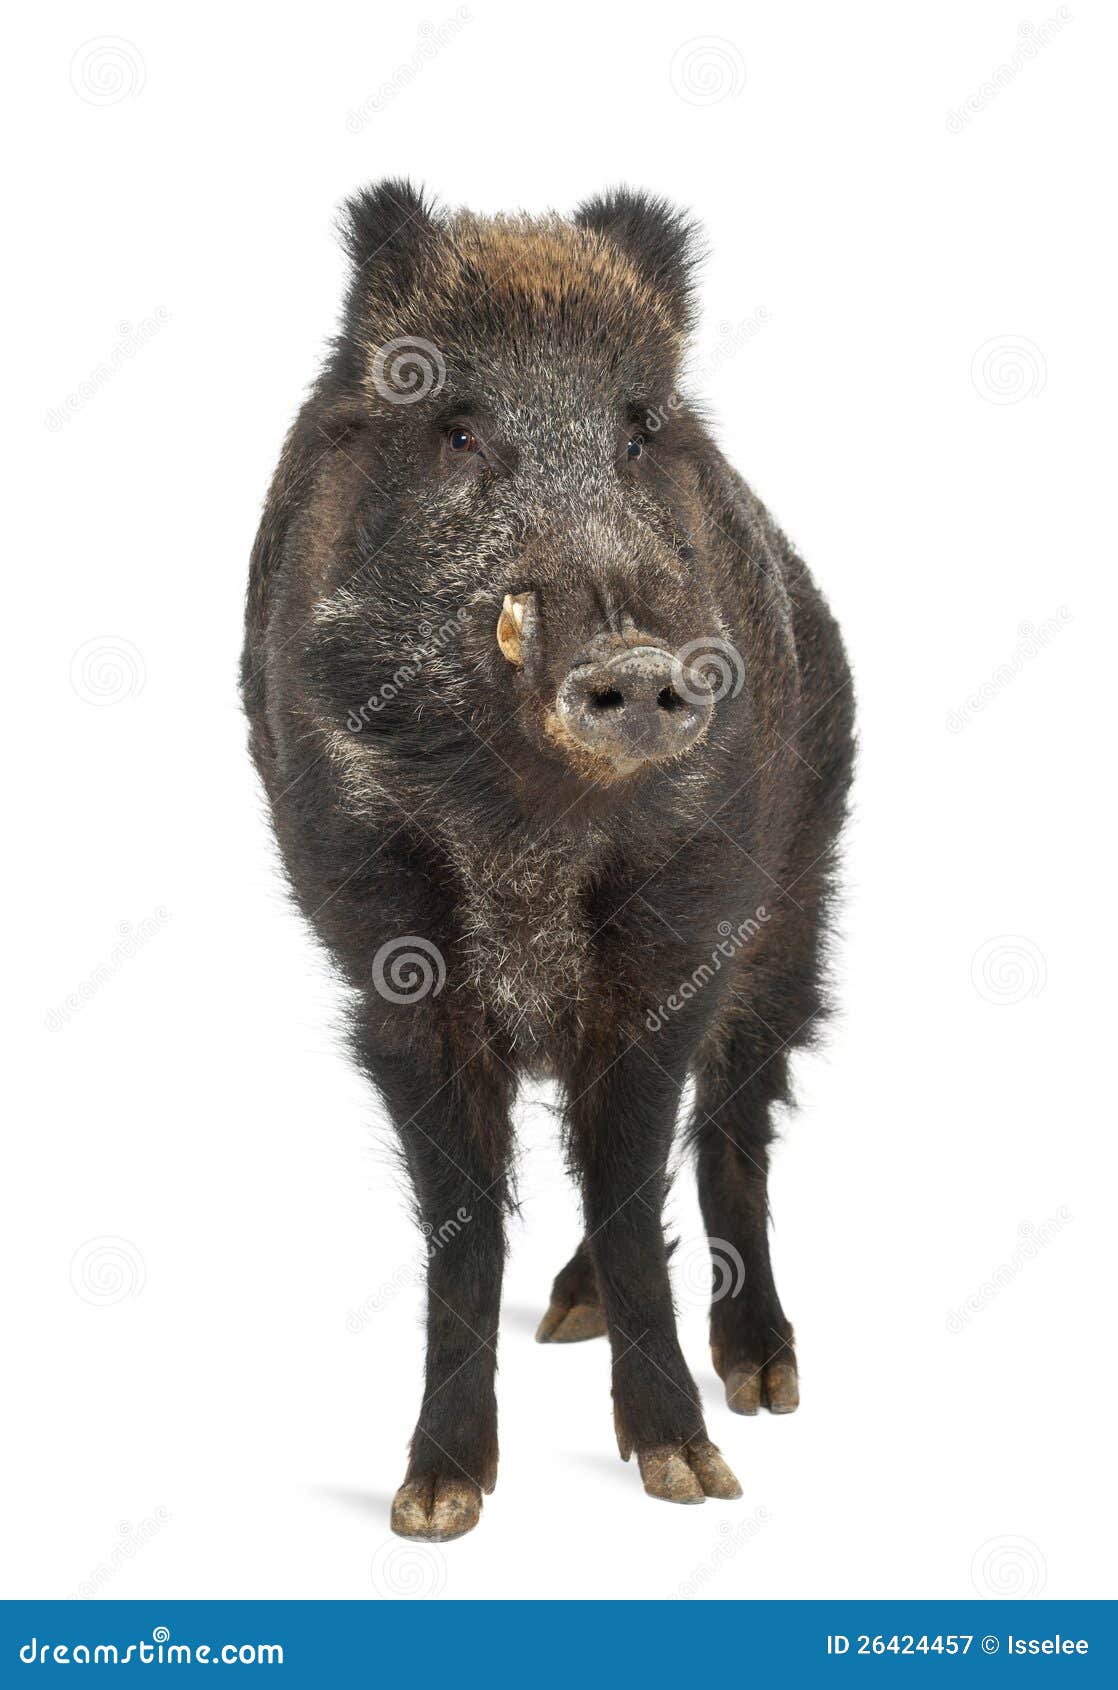 wild boar, also wild pig, sus scrofa